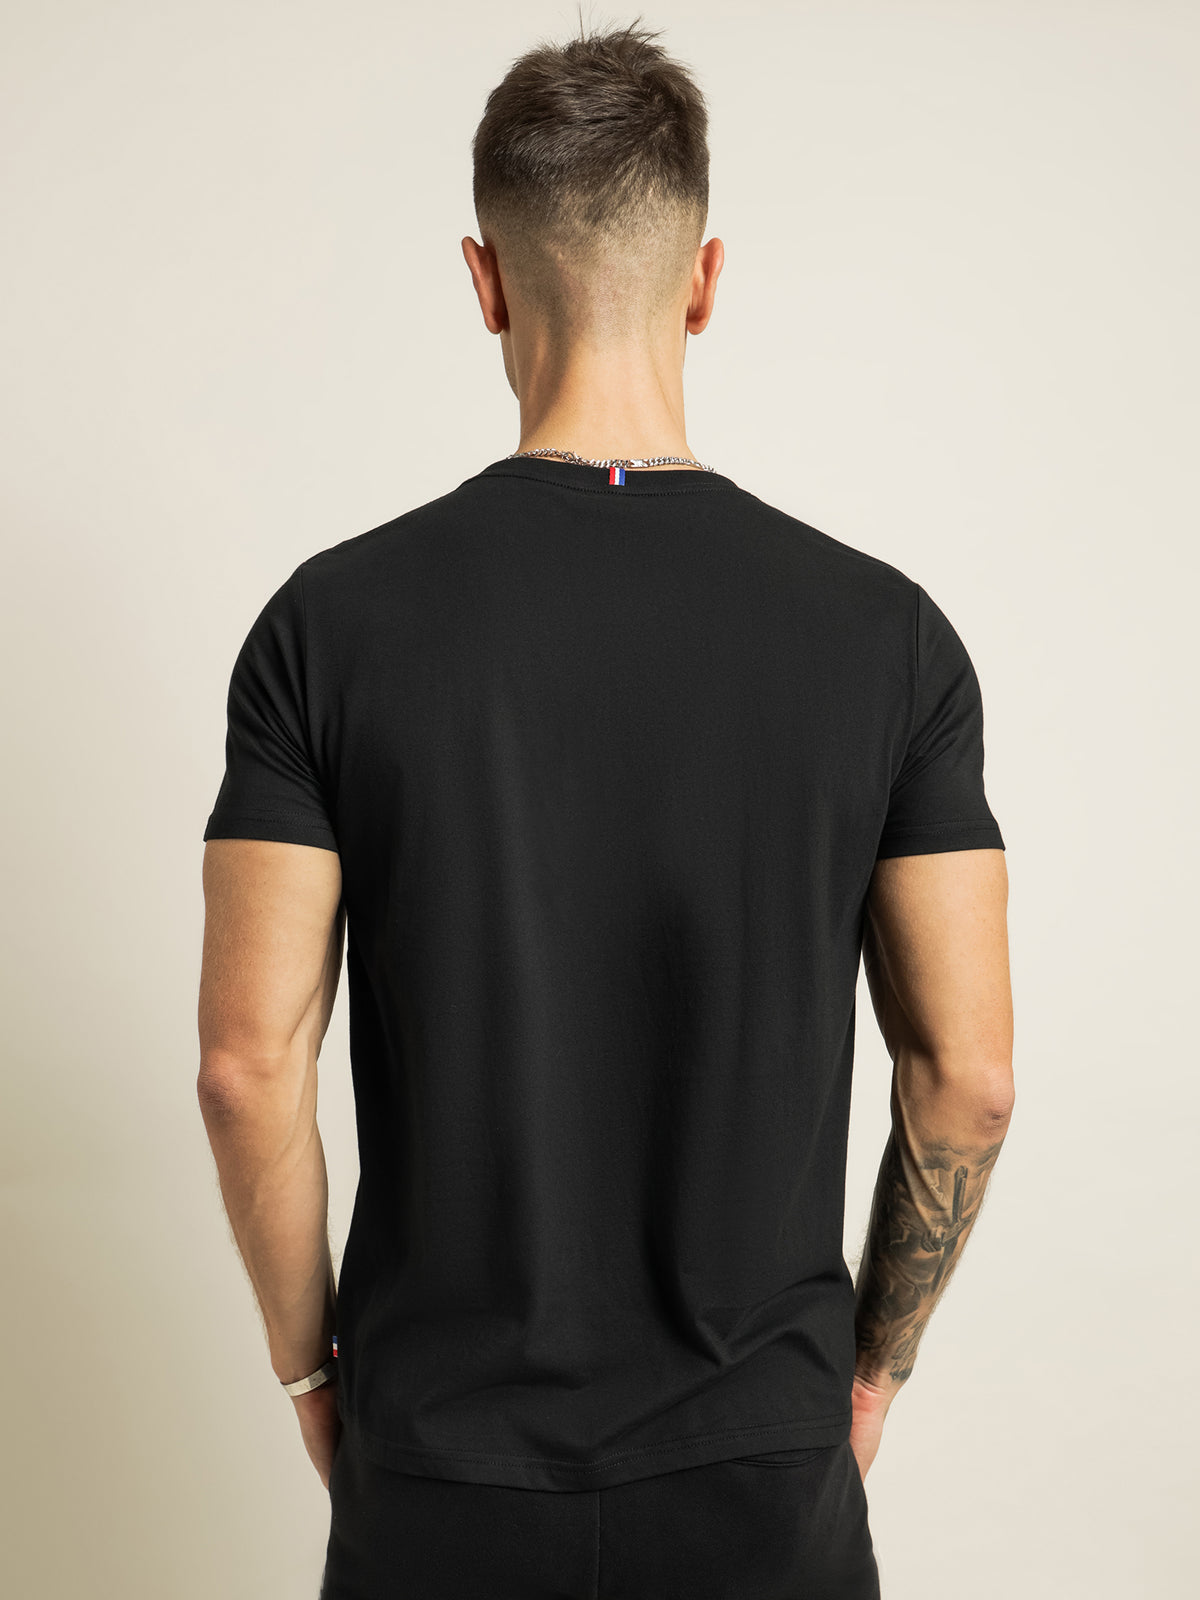 Roissey Foil T-Shirt in Black